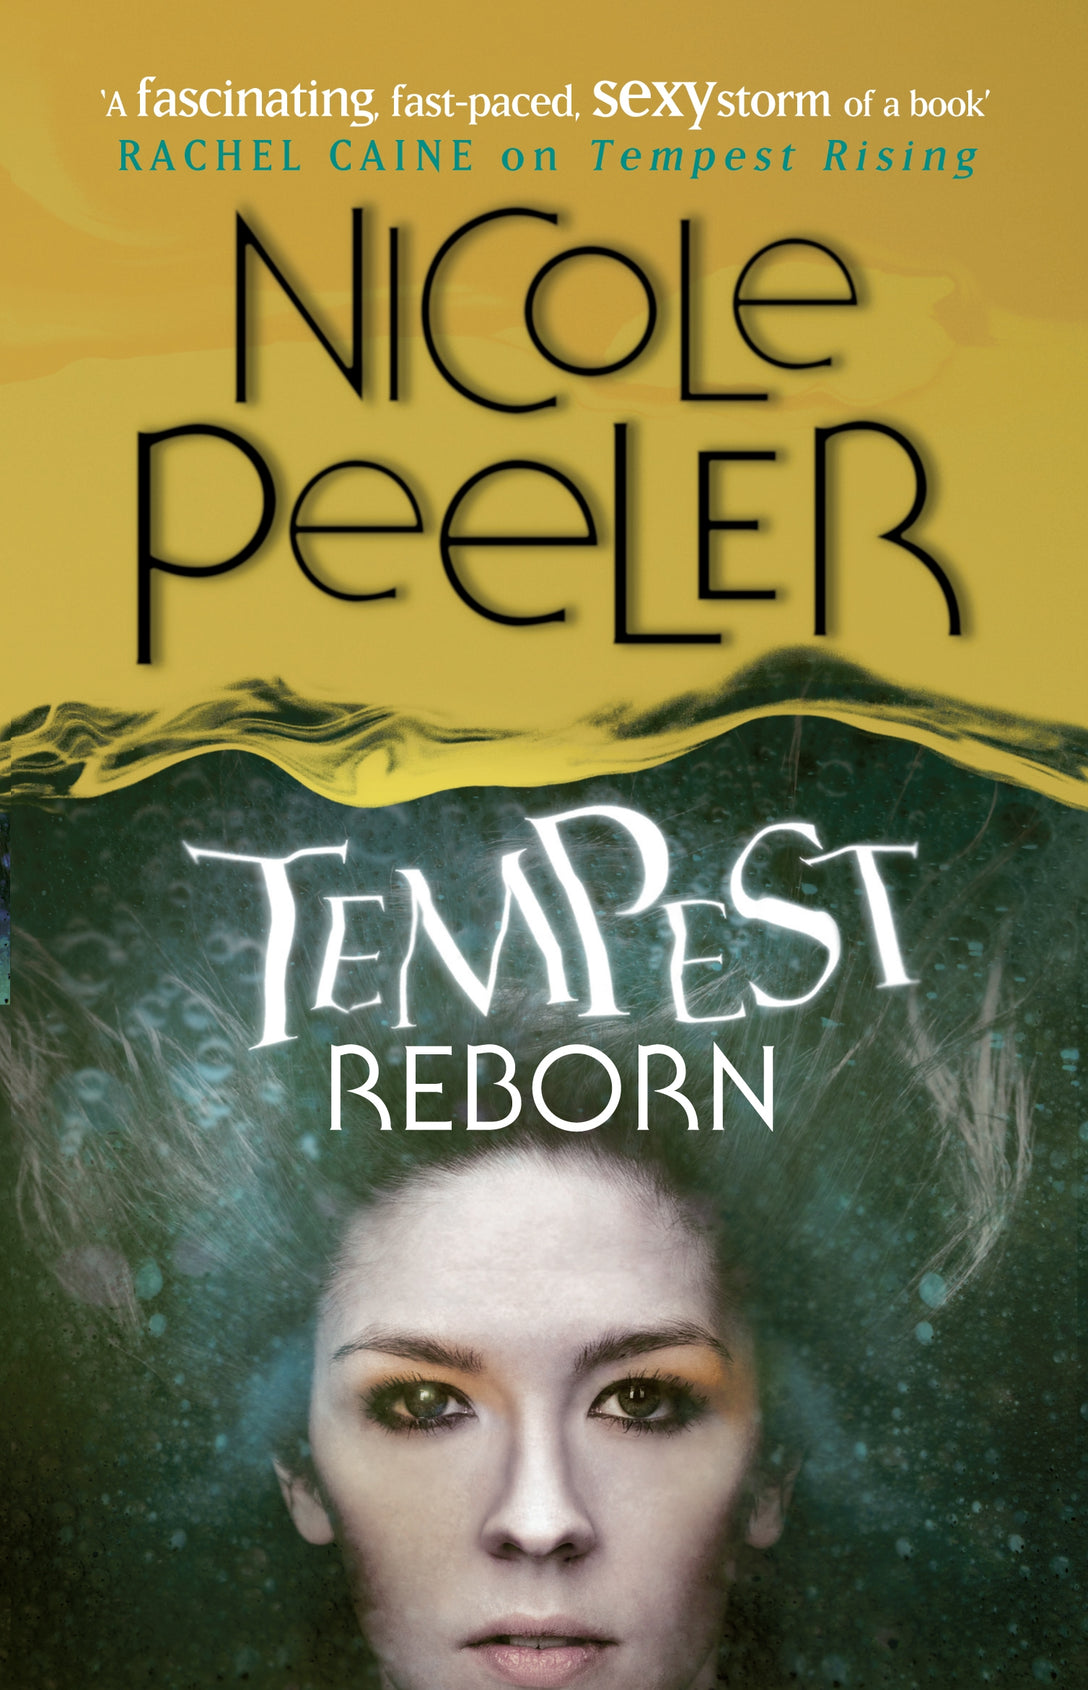 Tempest Reborn by Nicole Peeler